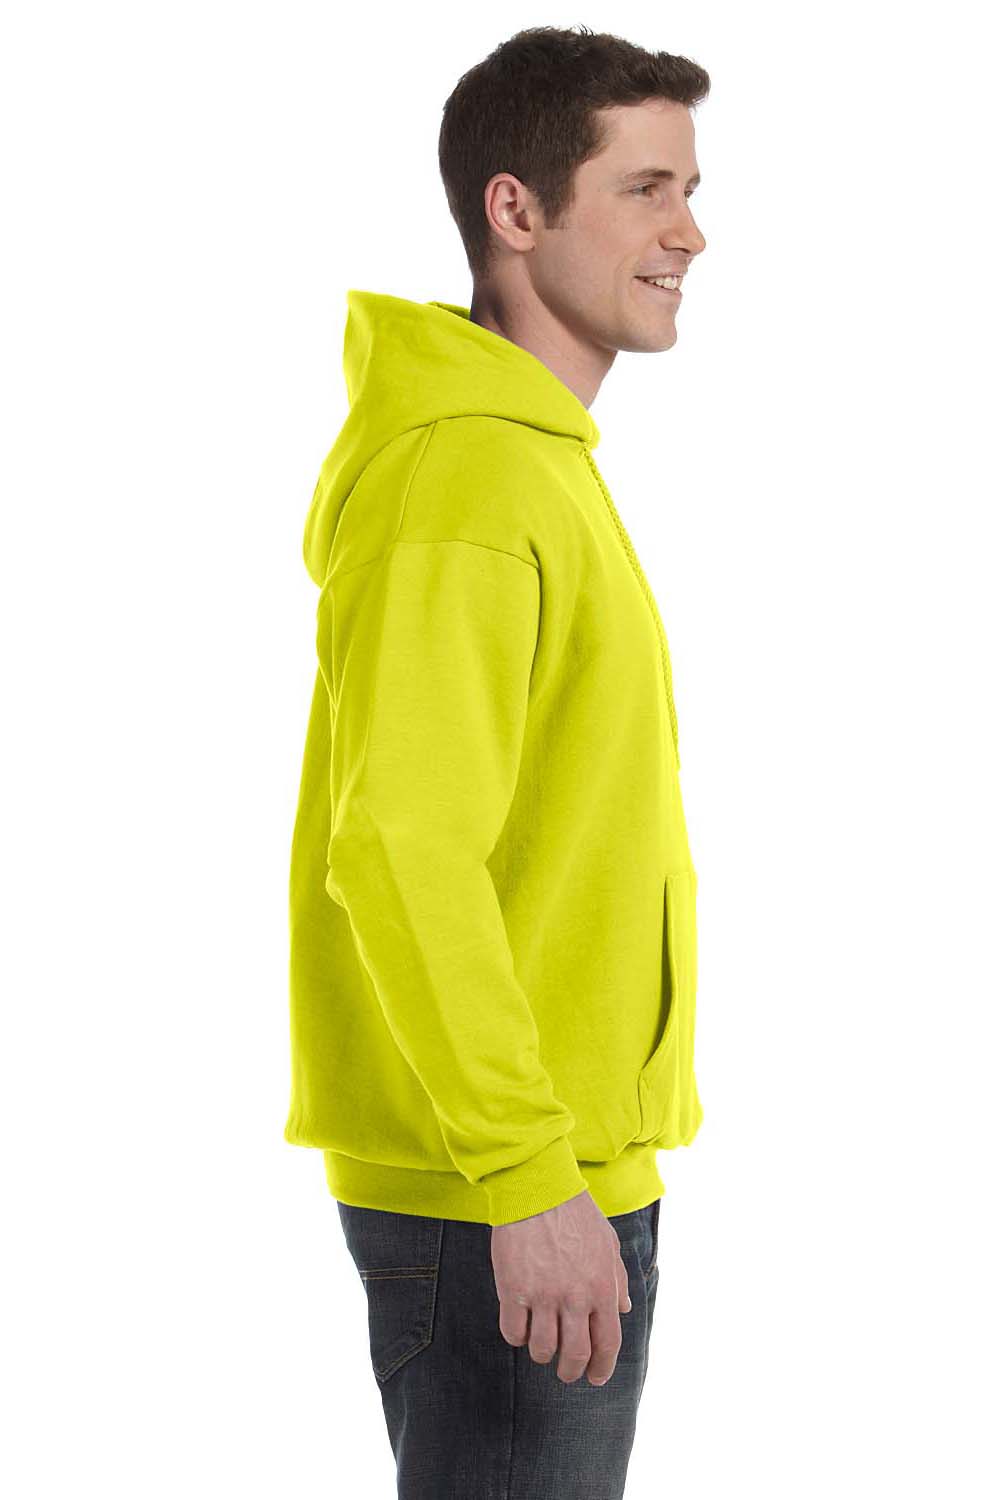 Hanes P170 Mens EcoSmart Print Pro XP Hooded Sweatshirt Hoodie Safety Green Side